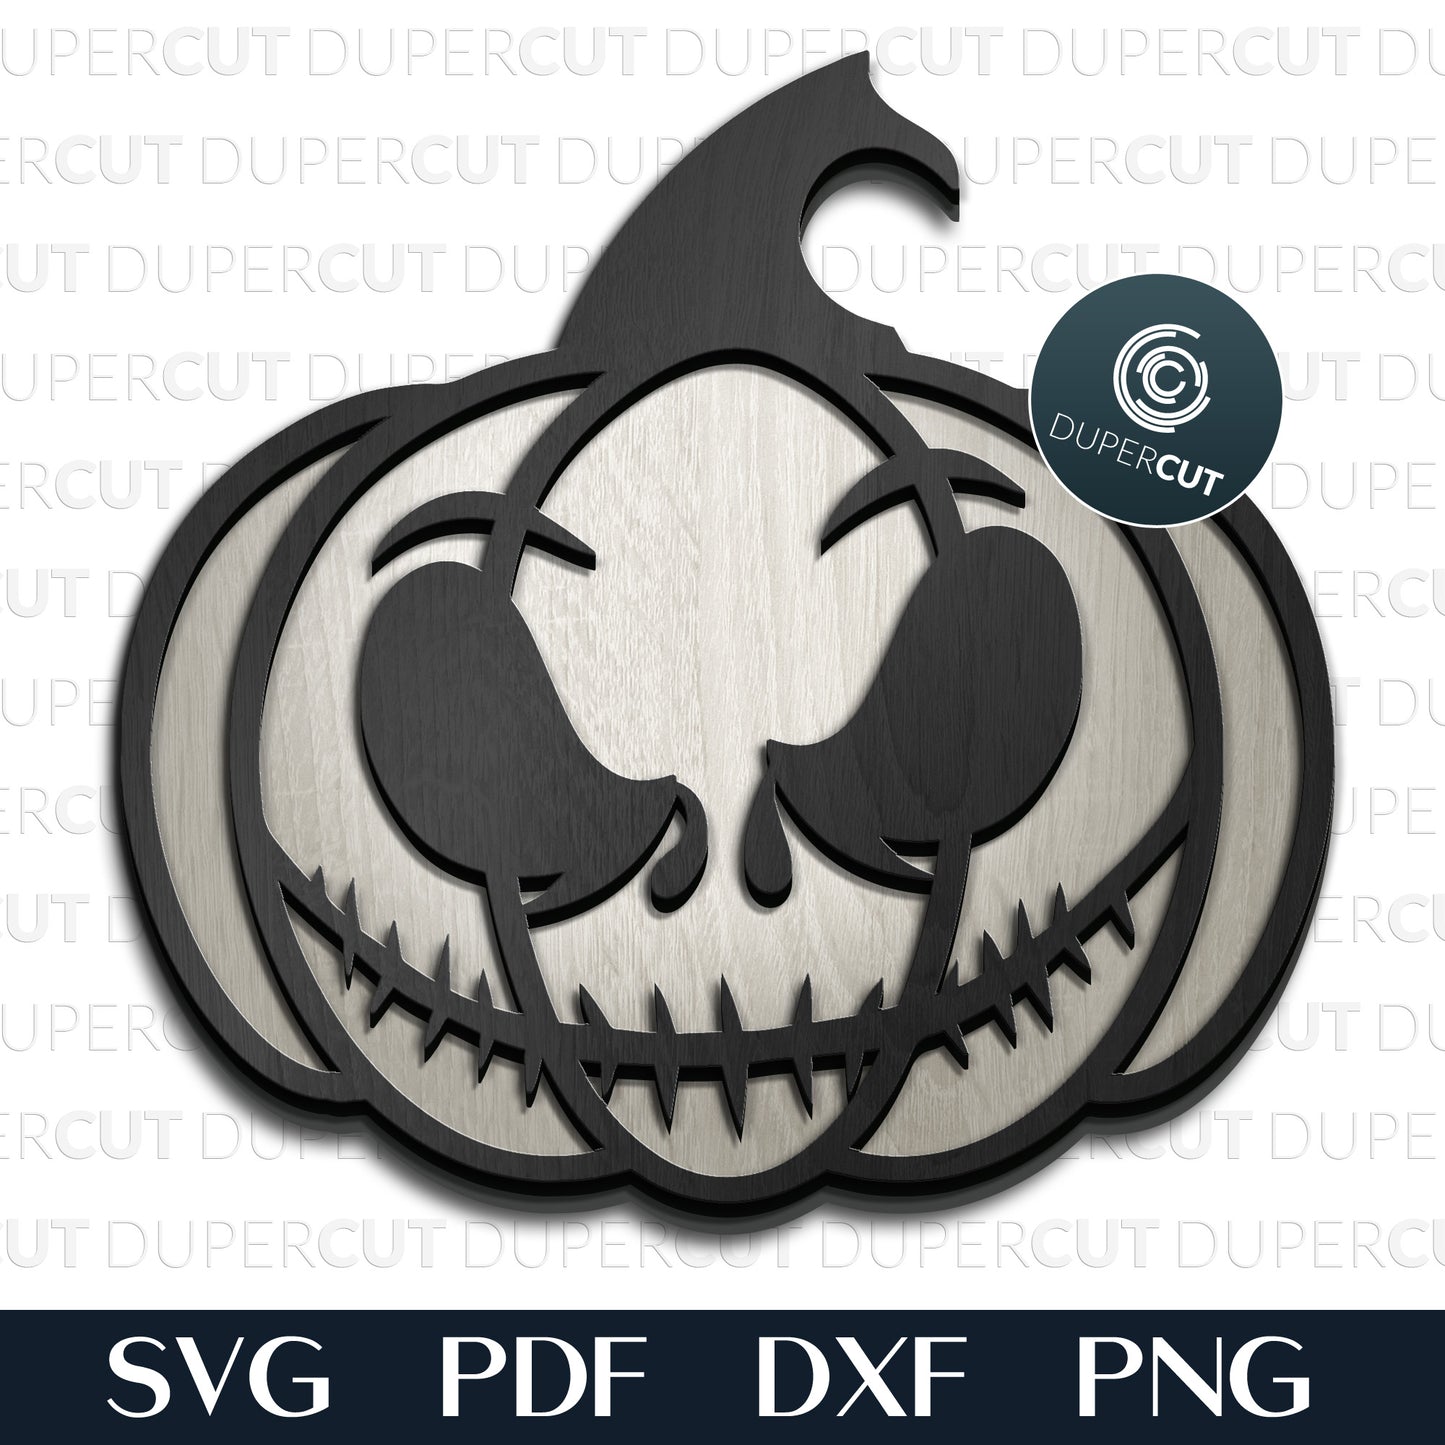 Jack Skellington face pumpkin Halloween decoration - SVG PNG DXF vector laser cutting files for Cricut, Glowforge, Silhouette, CNC plasma machines by DuperCut